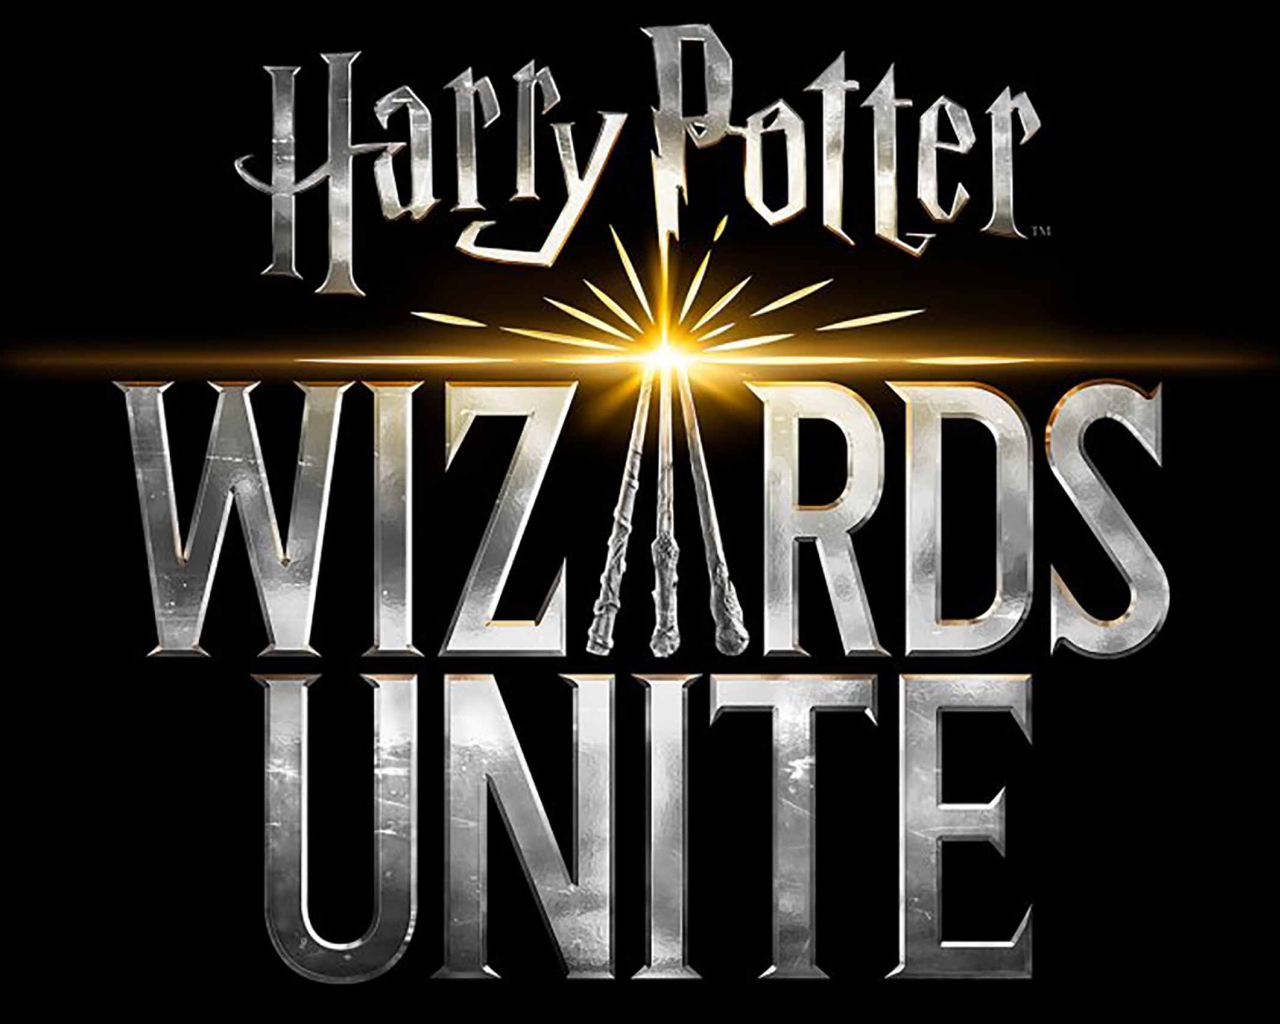 Логотип новой видеоигры Harry Potter: Wizards Unite, 2019 года на черном фоне